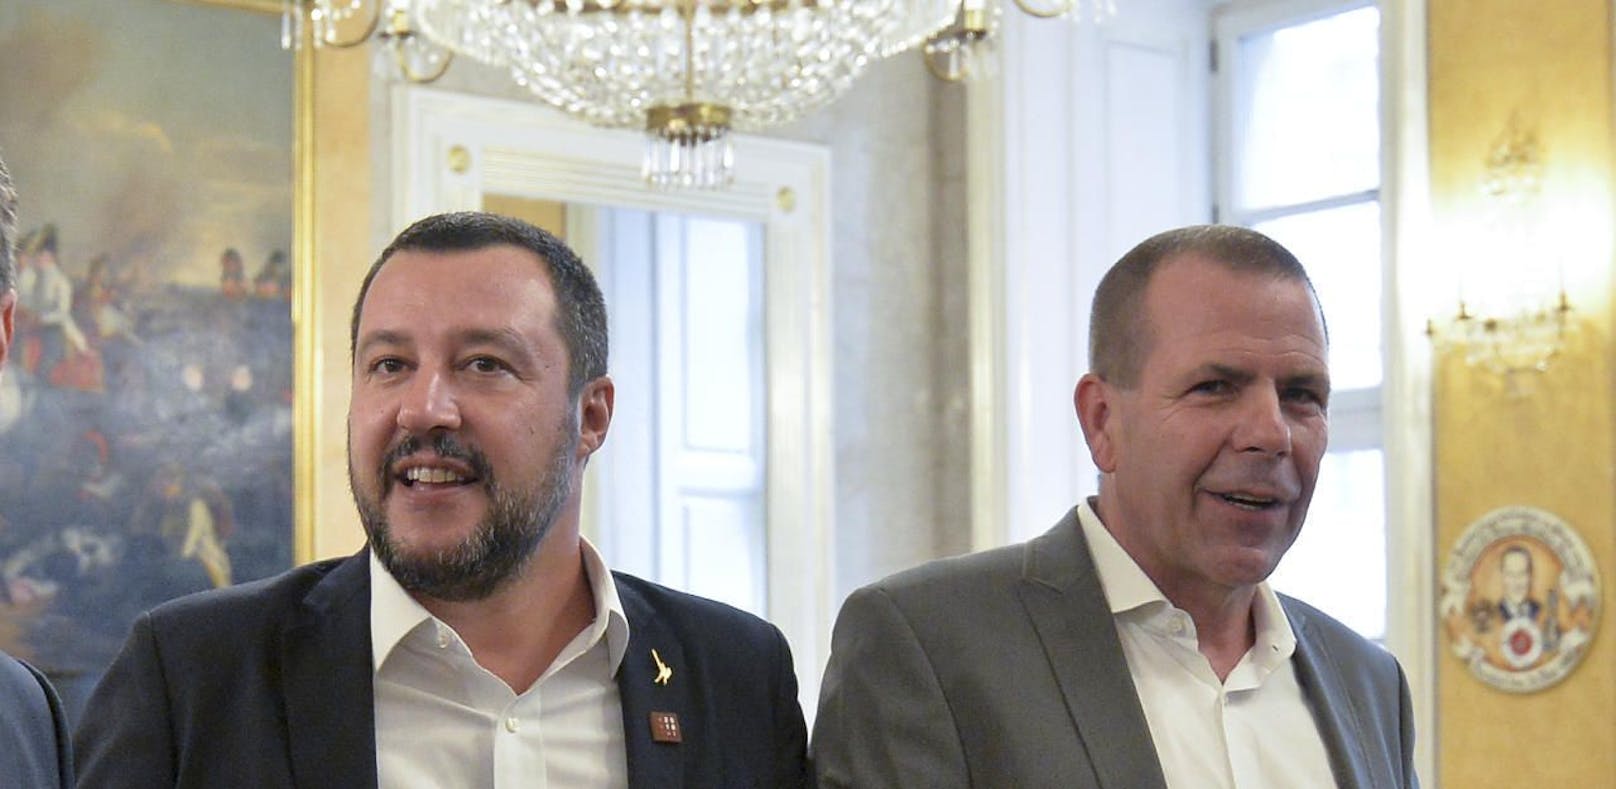 Salvini sieht in Türkis-Grün "unnatürliche" Kombi